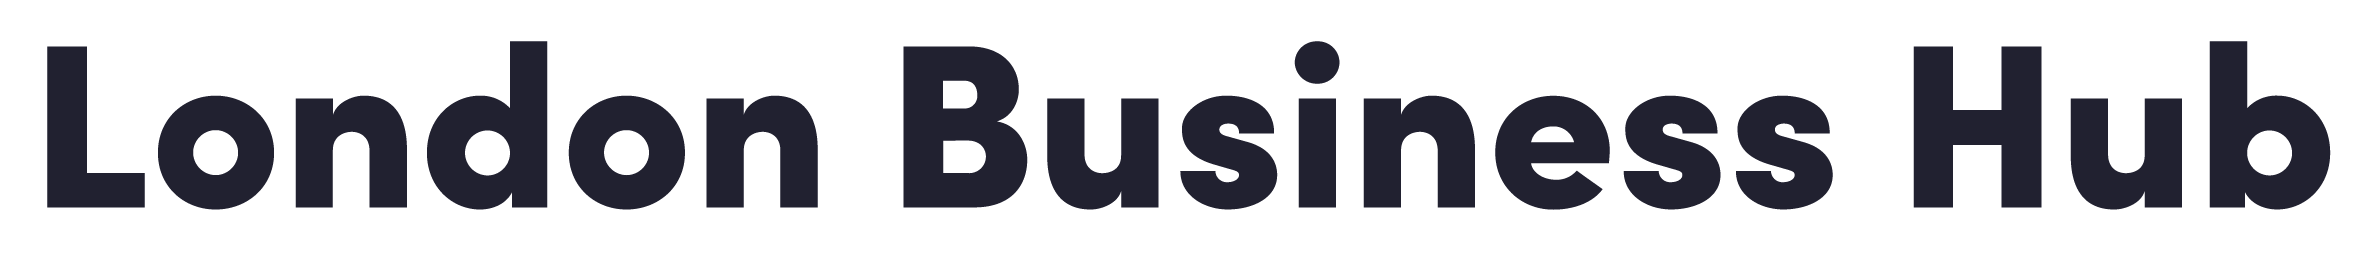 London Business Hub Logo